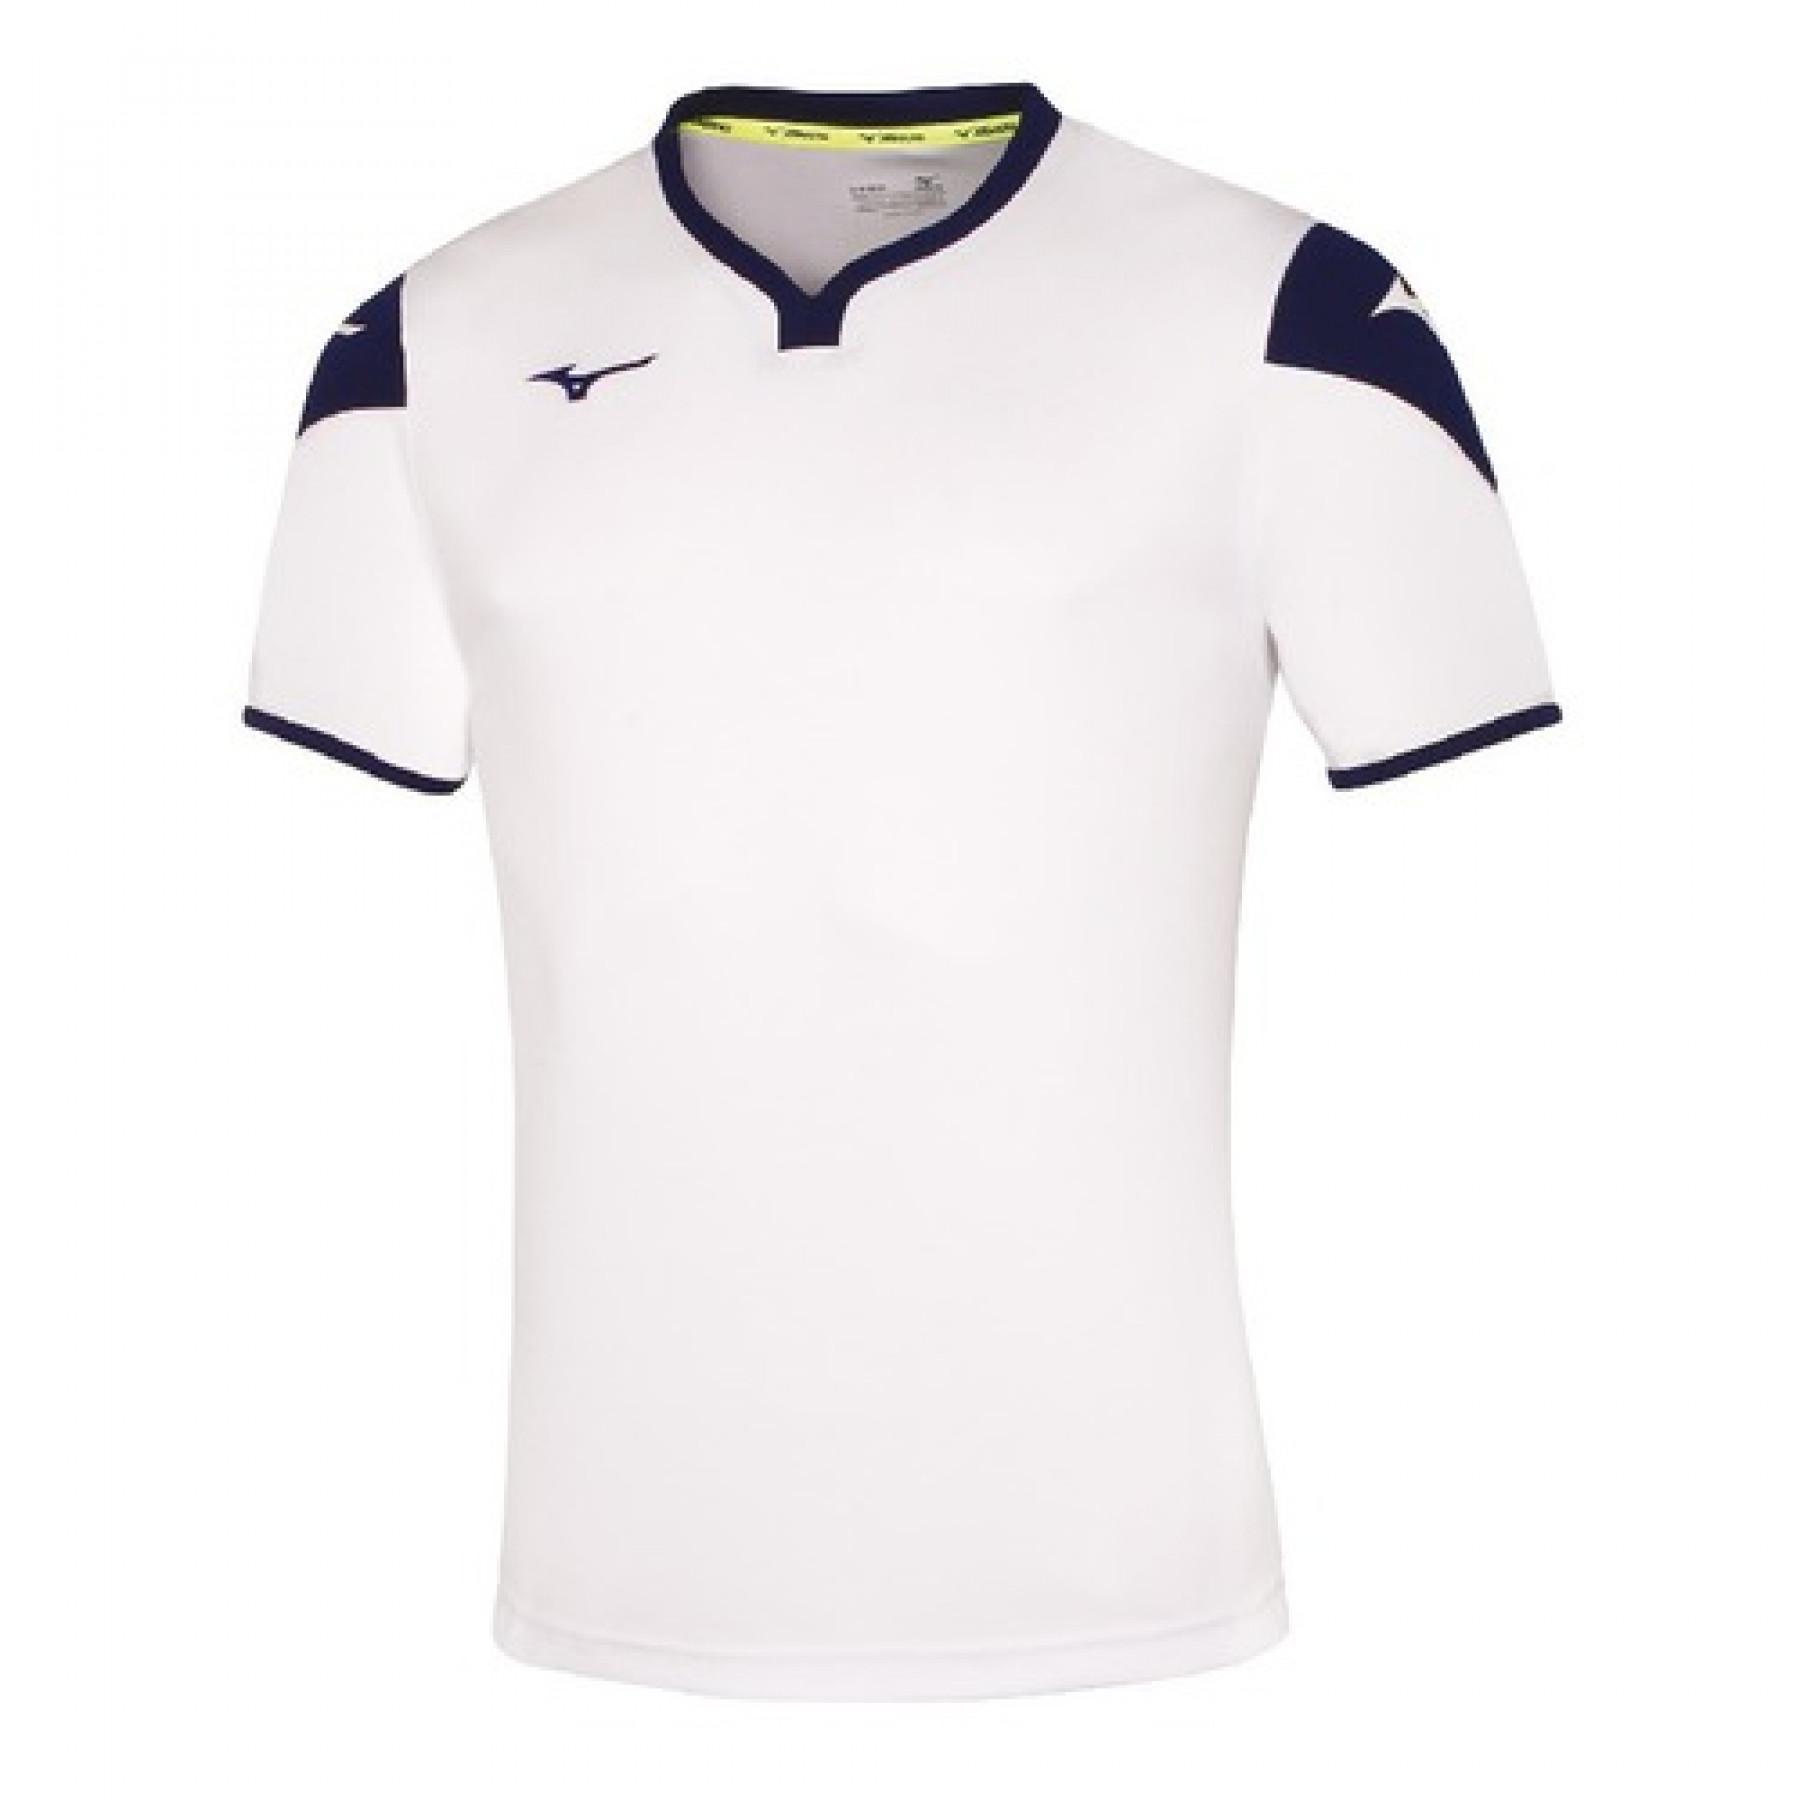 T-shirt Mizuno Team game runbird - & polo shirts - Men's wear wear